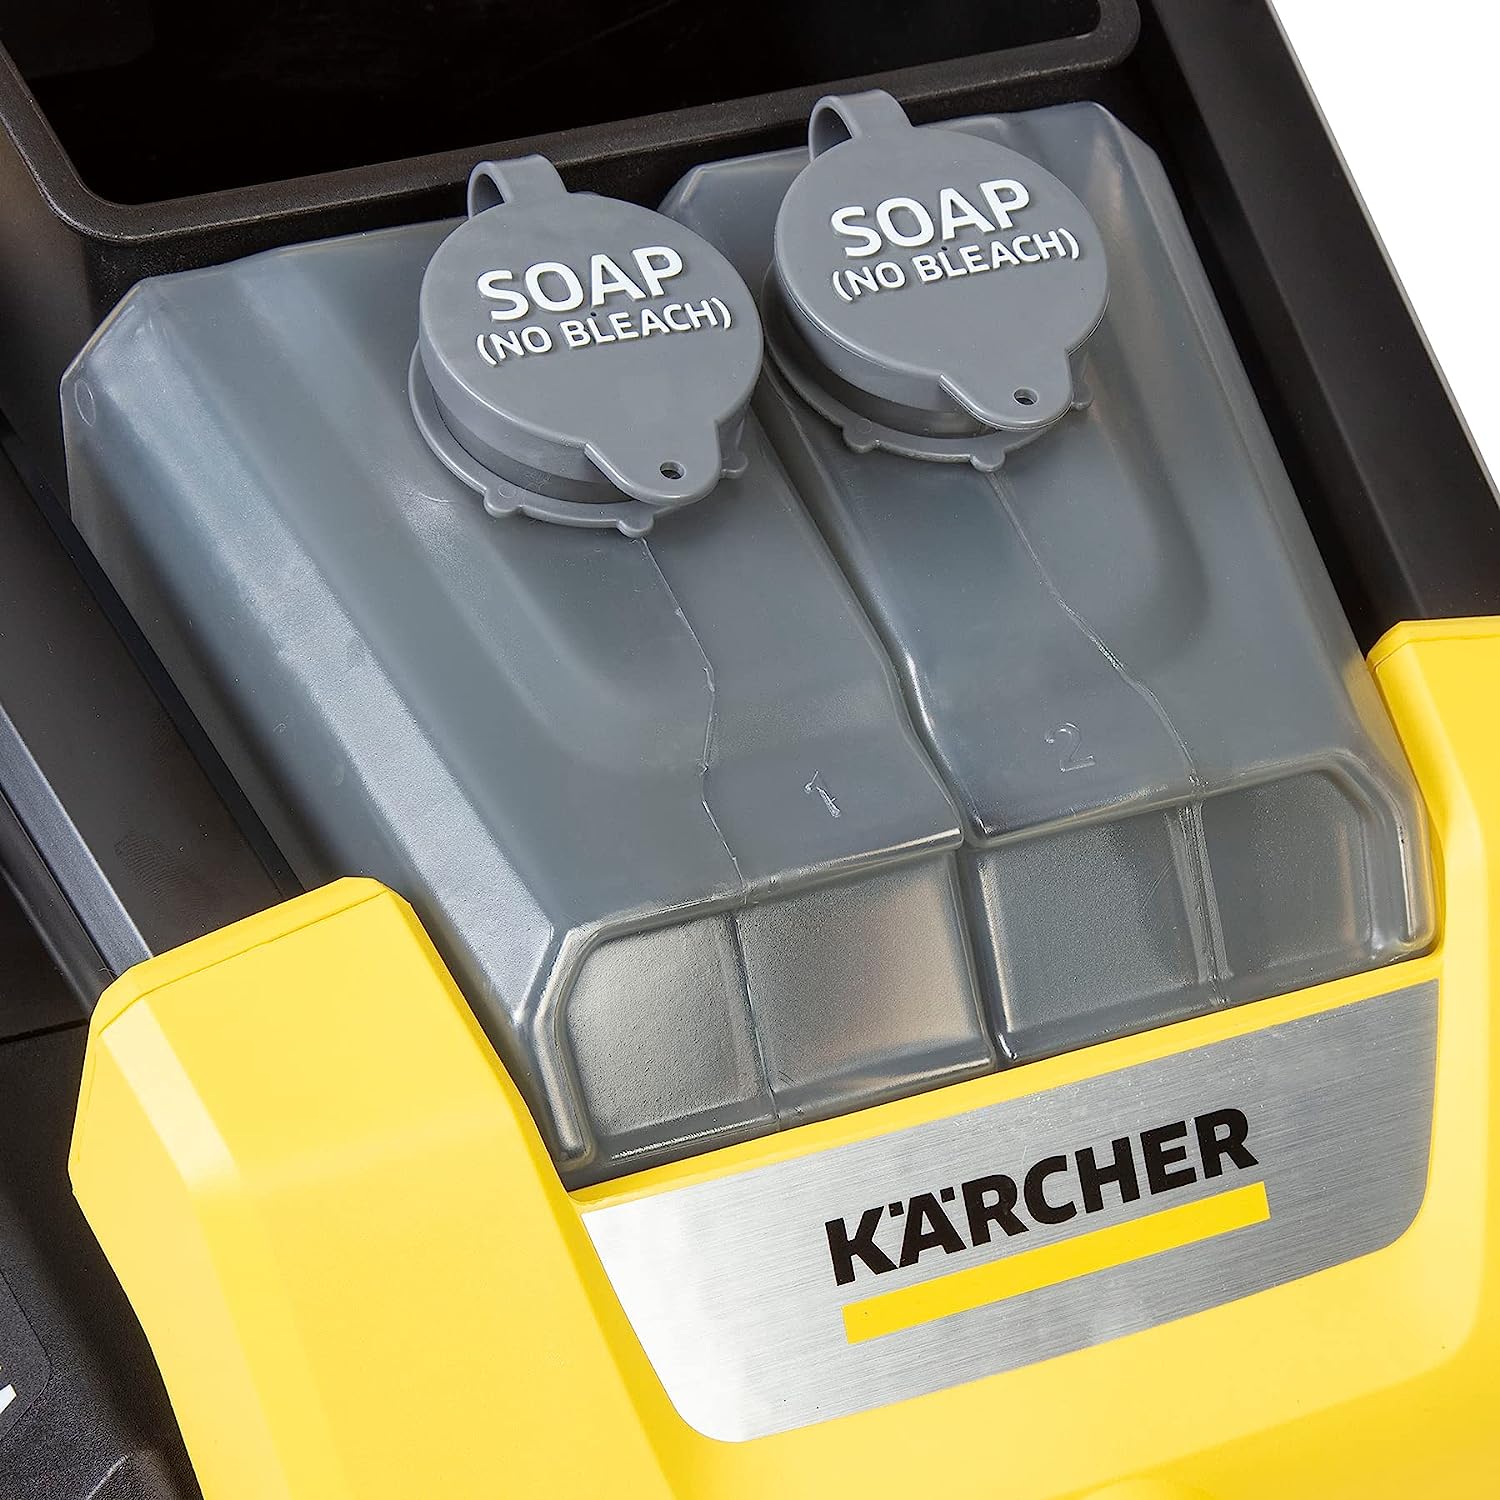 کارواش کرشر مدل Karcher K2300PS - ارسال الی 10 الی 15 روز کاری